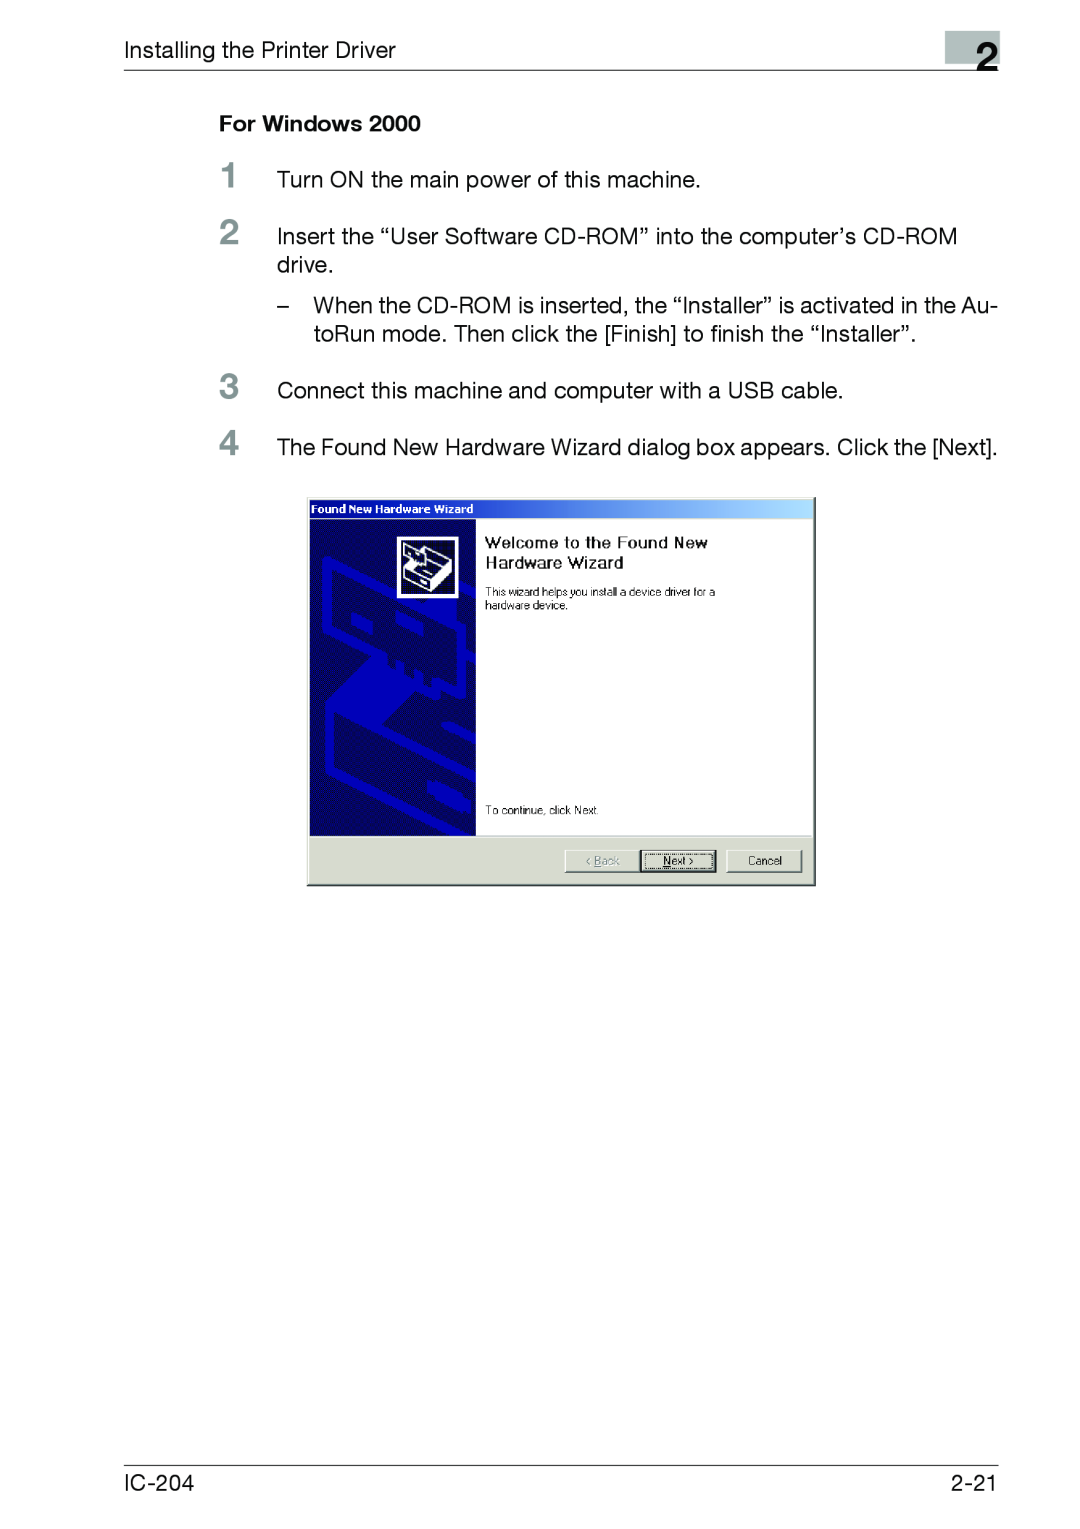 Konica Minolta IC-204 manual 1 2 3, For Windows 